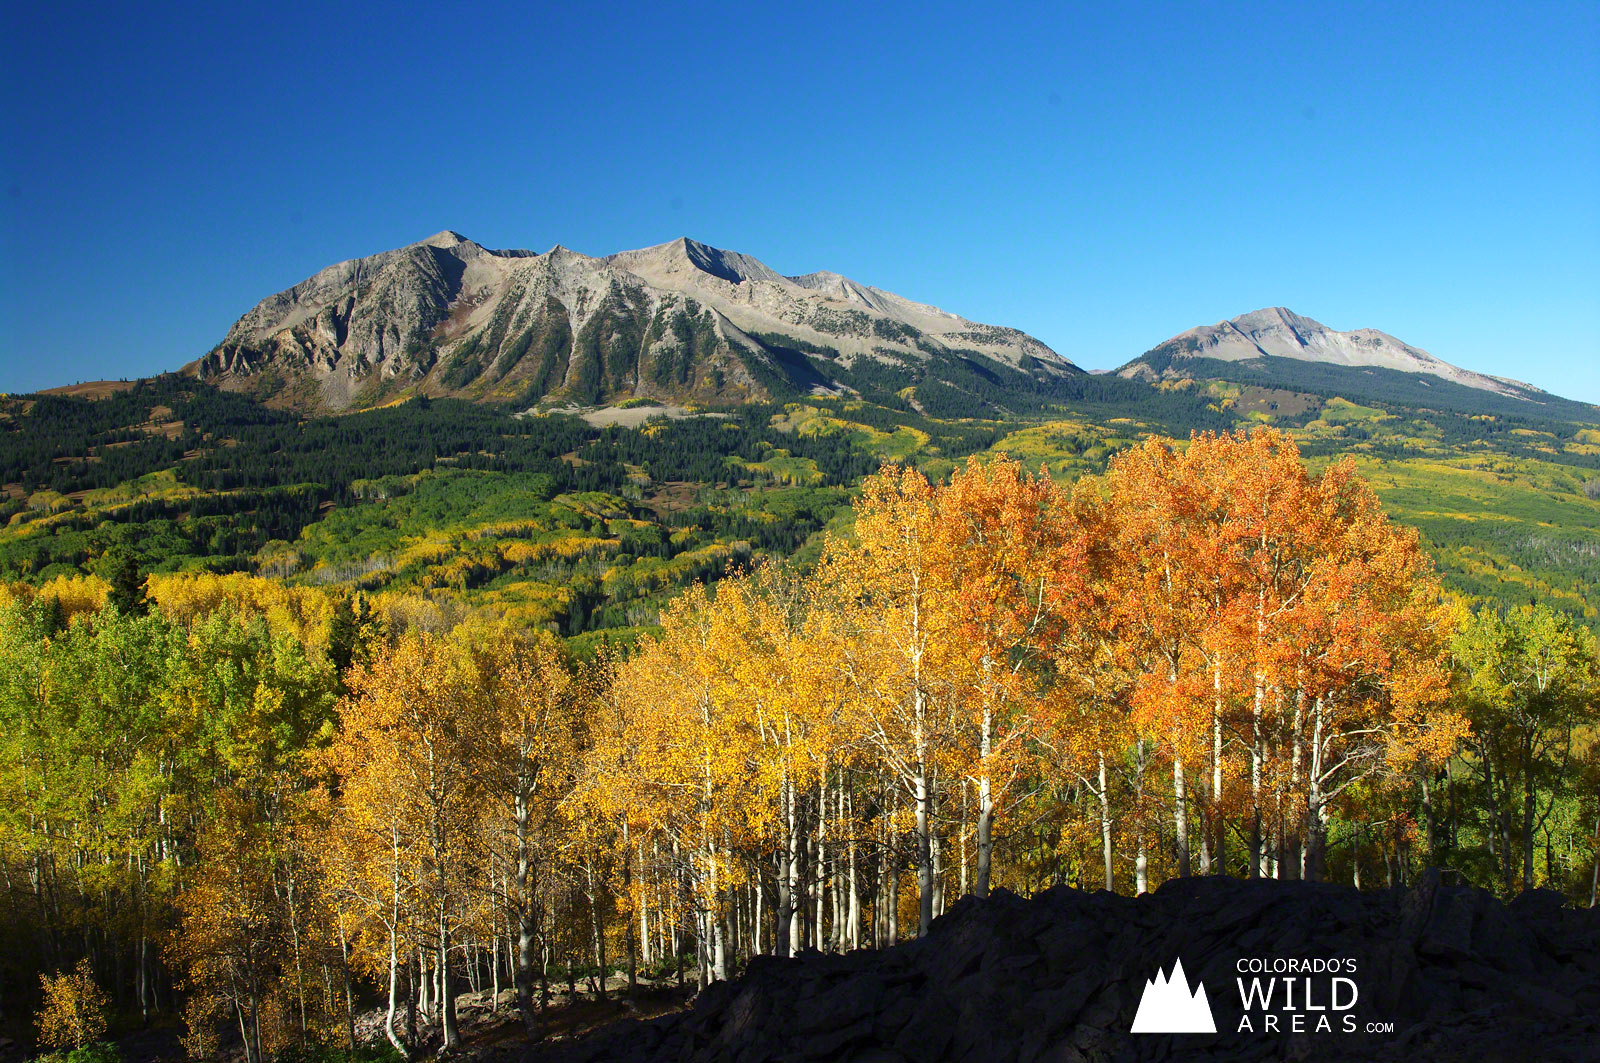 Colorado S Fall Colors Wallpaper Wild Areas